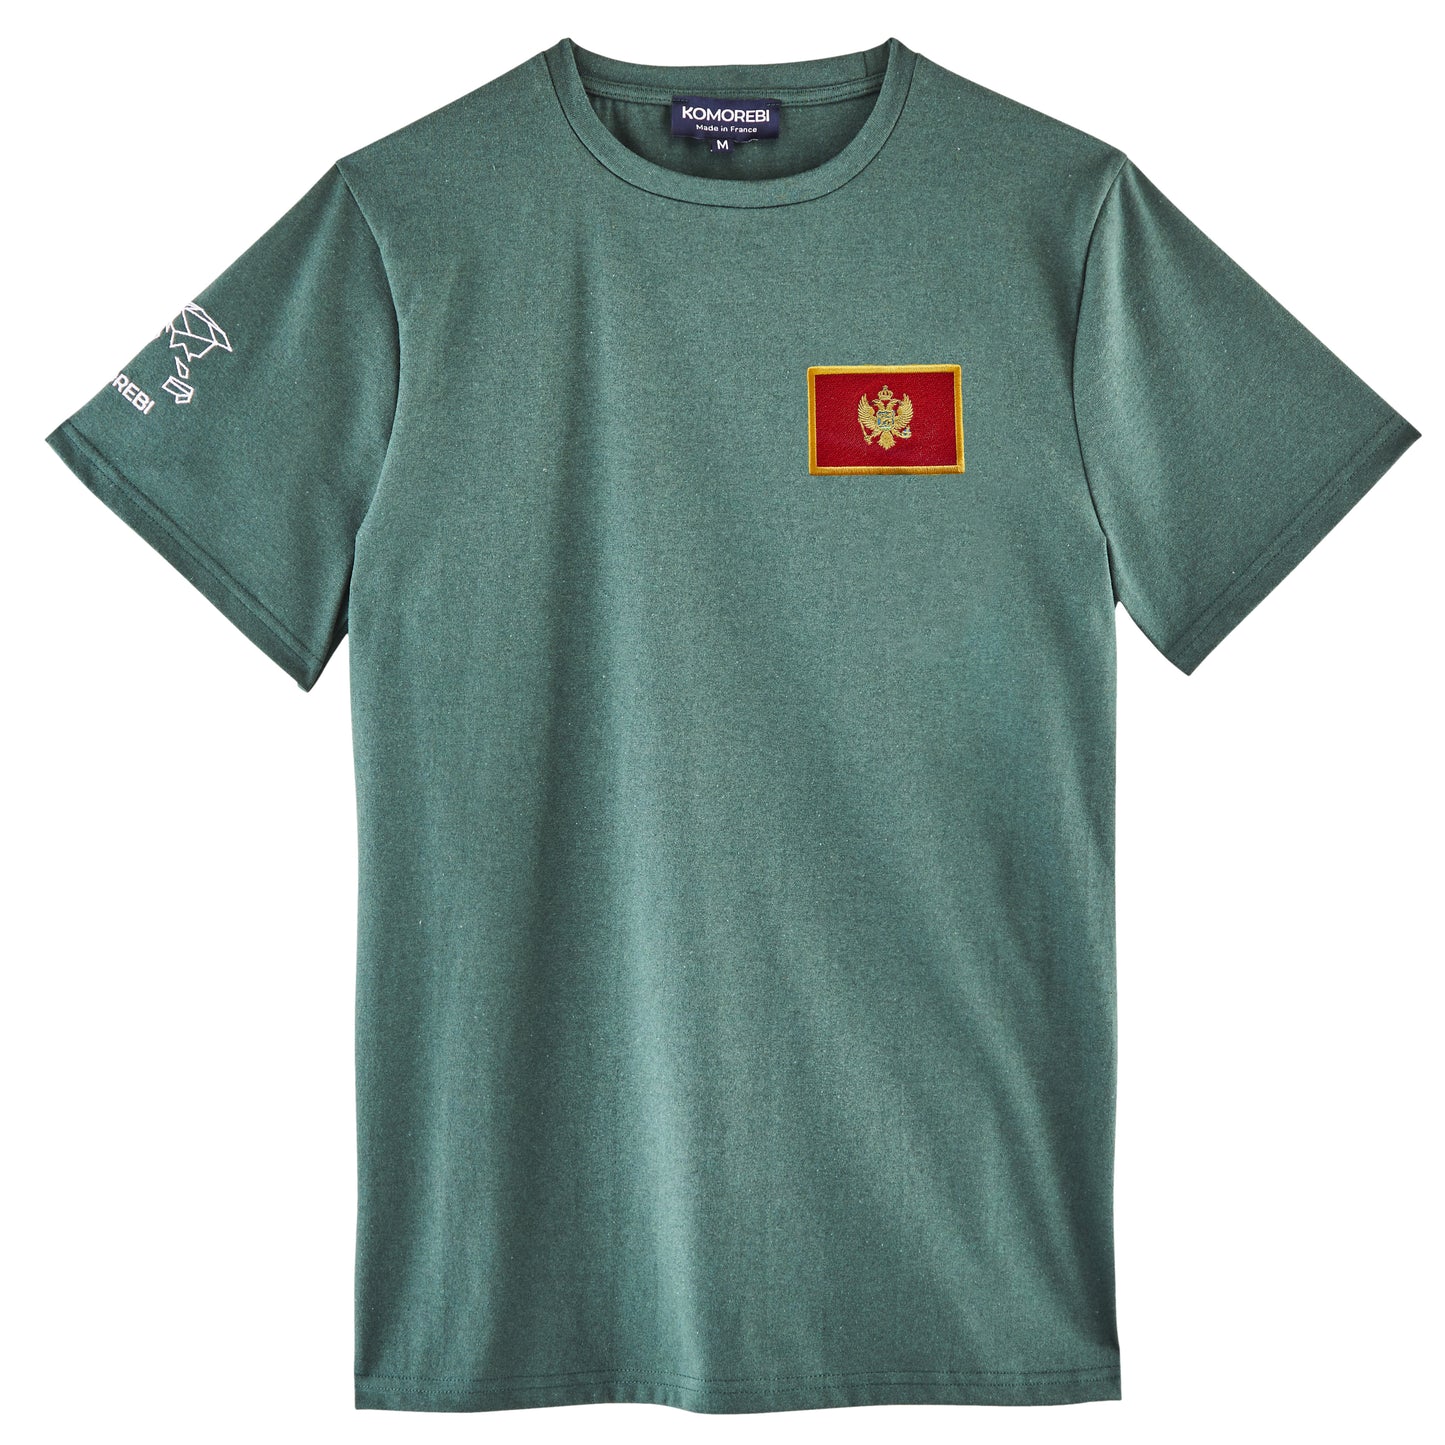 Montenegro - flag t-shirt